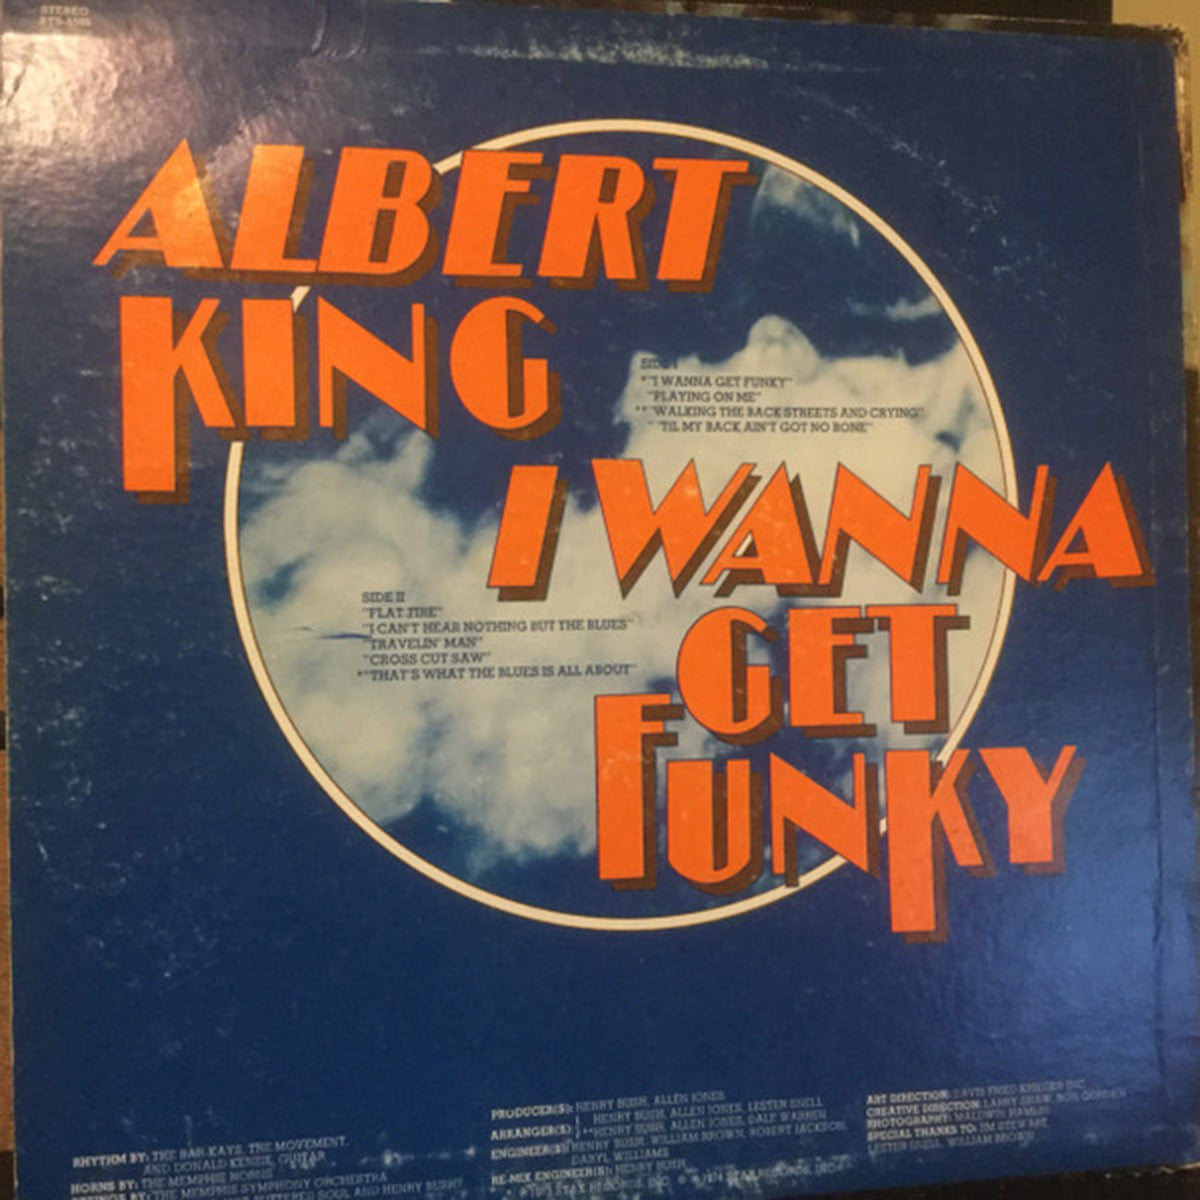 Albert King – I Wanna Get Funky - 1974 US Pressing